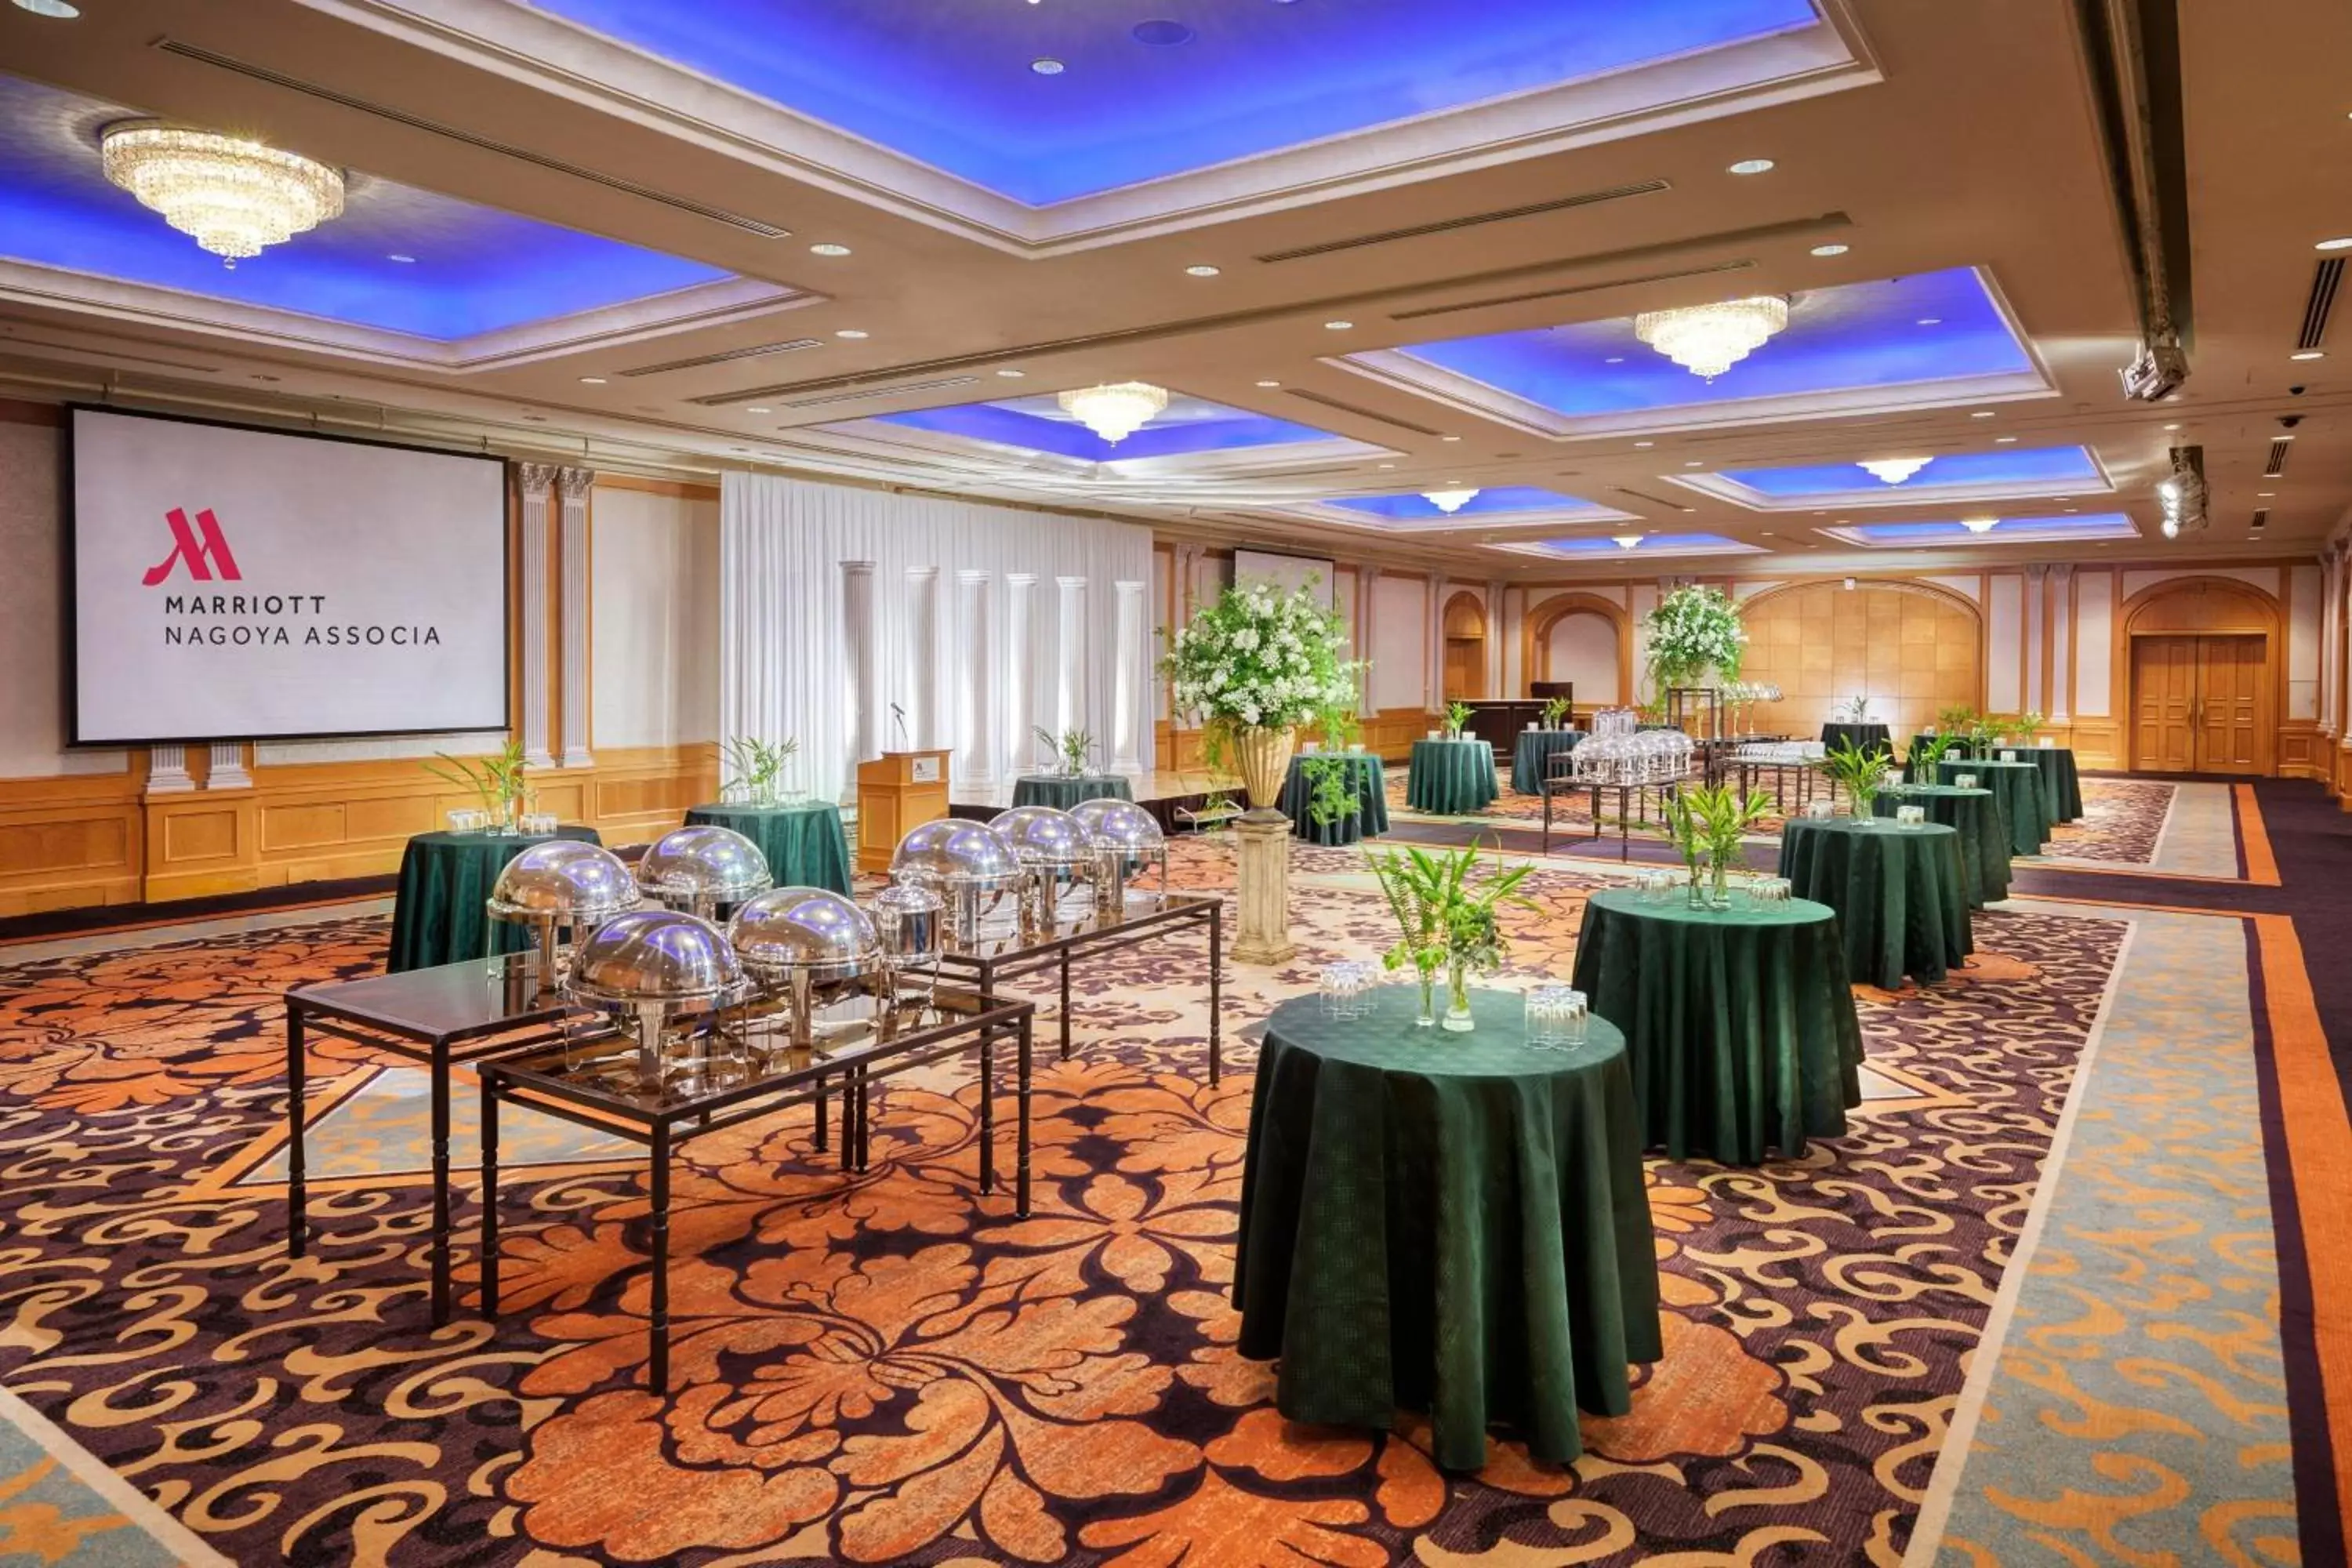 Meeting/conference room, Banquet Facilities in Nagoya Marriott Associa Hotel